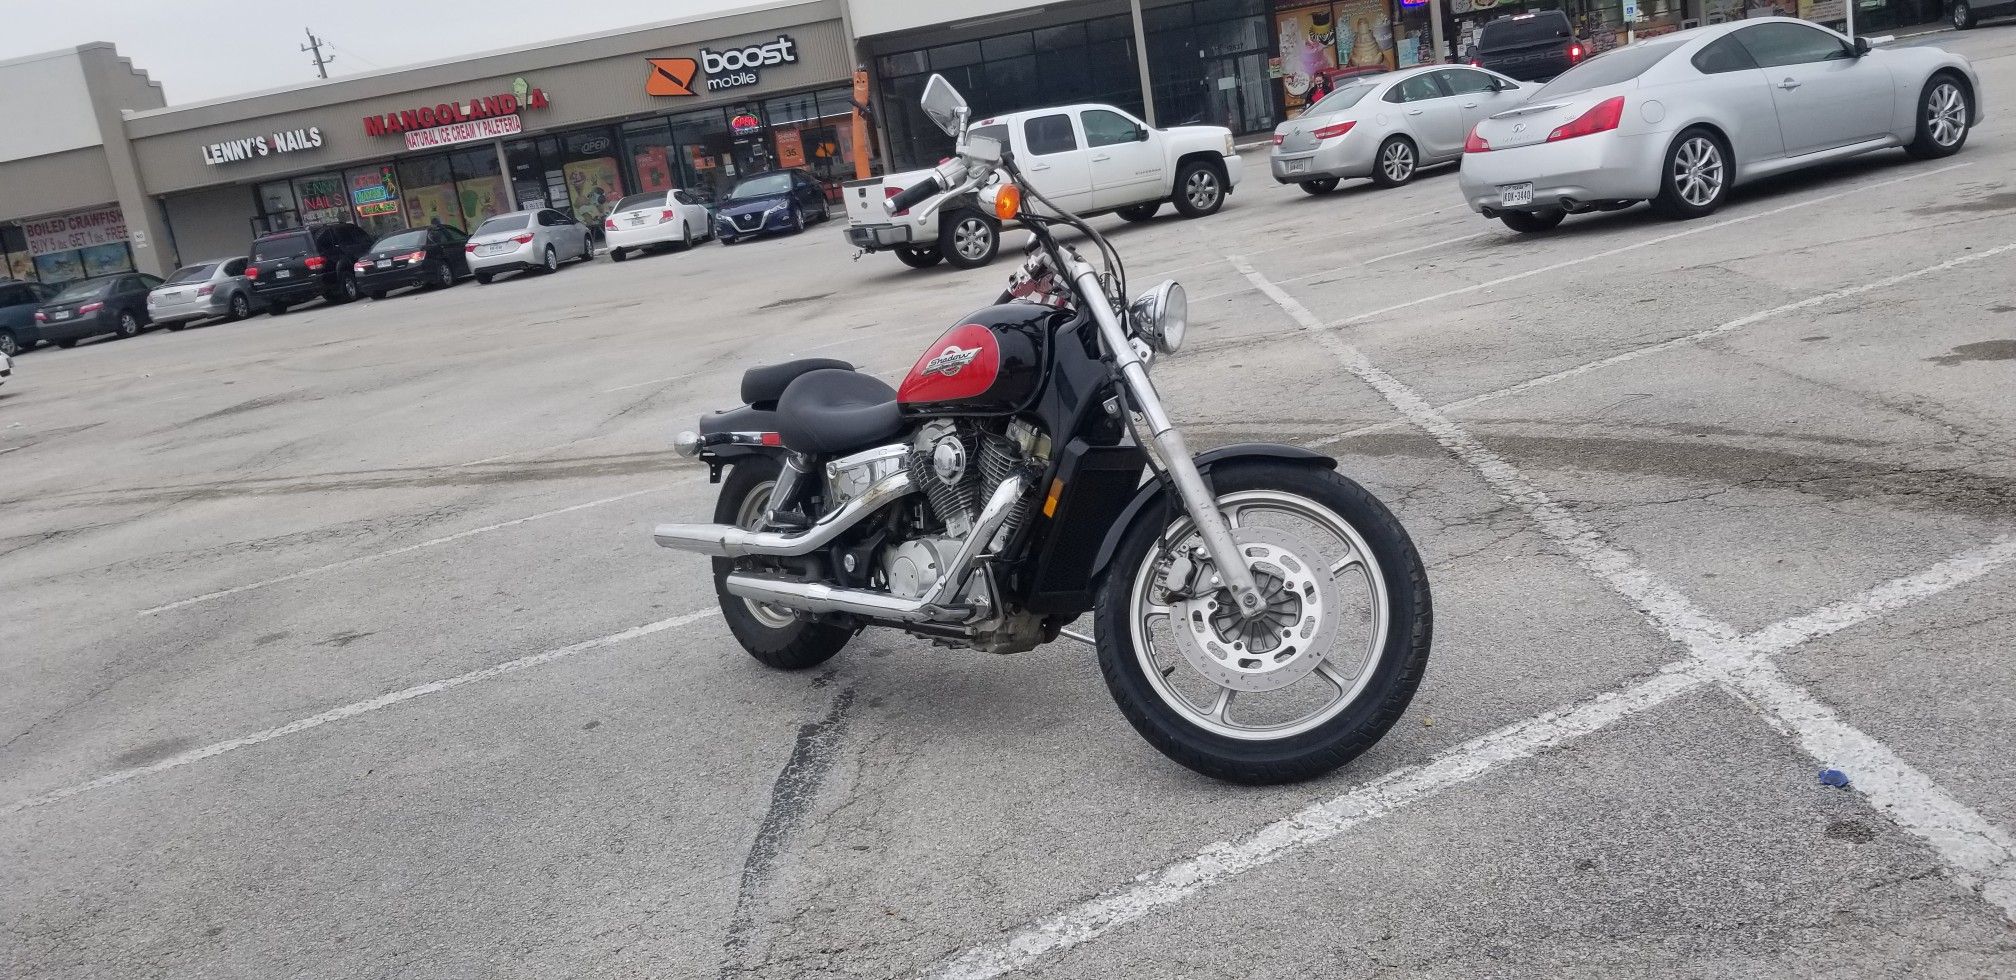 Honda Shadow 1100cc Motorcycle